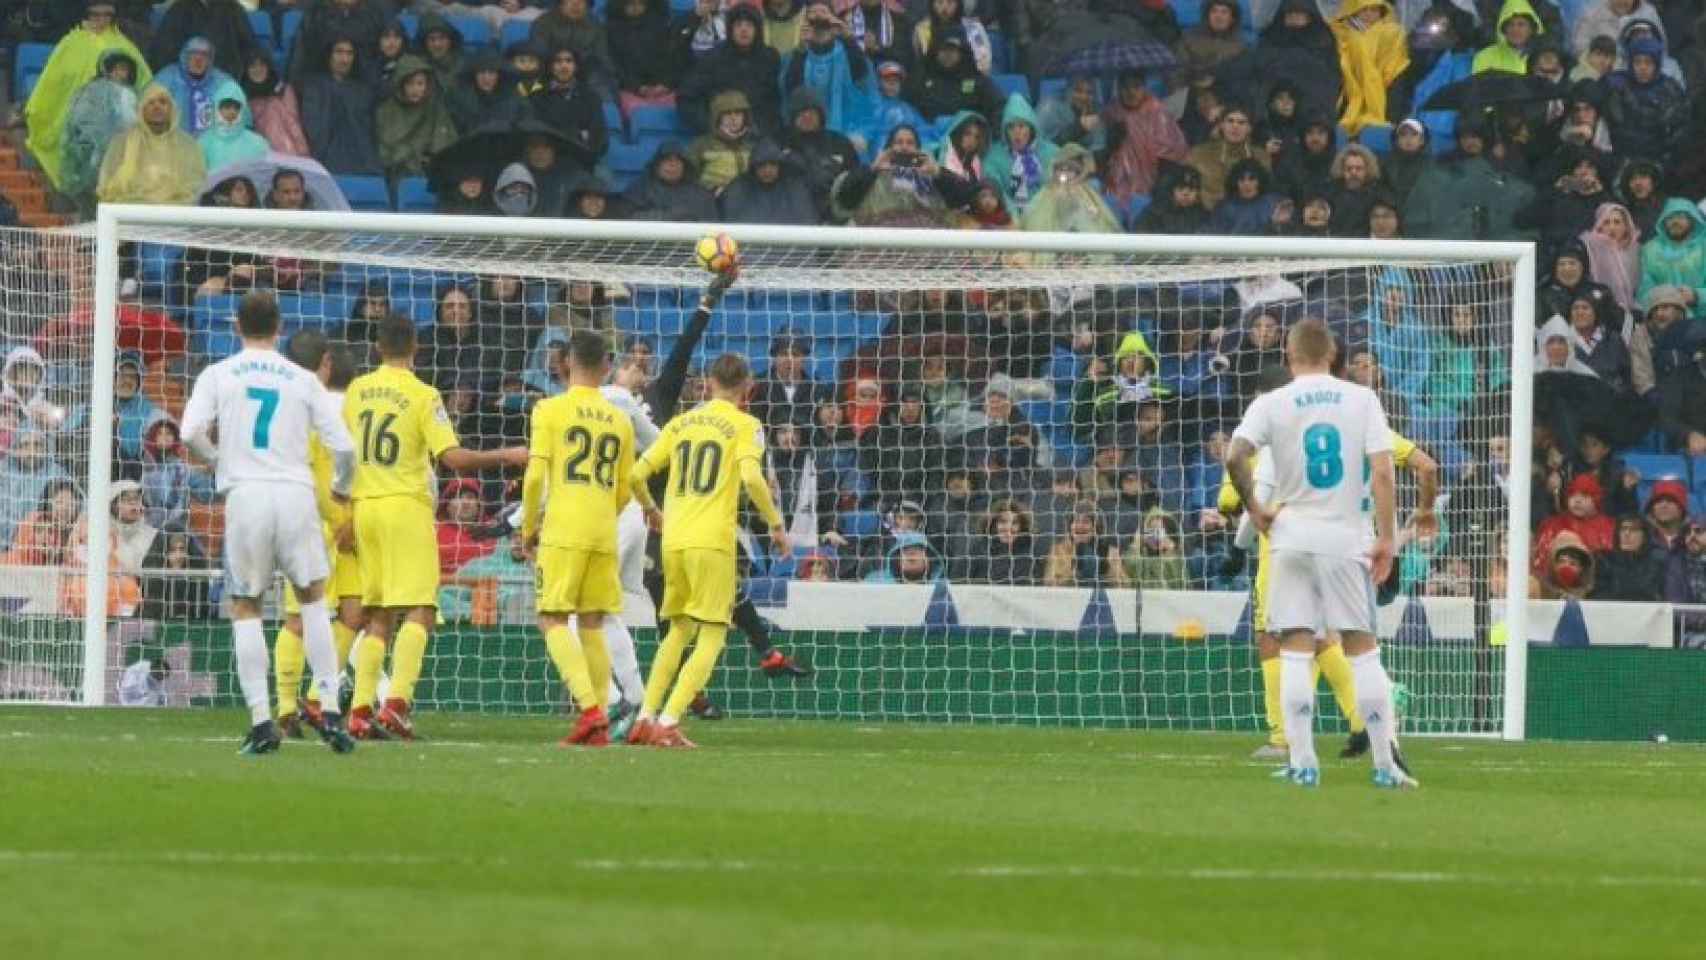 Asenjo frenando al Madrid. Foto: Manu Laya / El Bernabéu